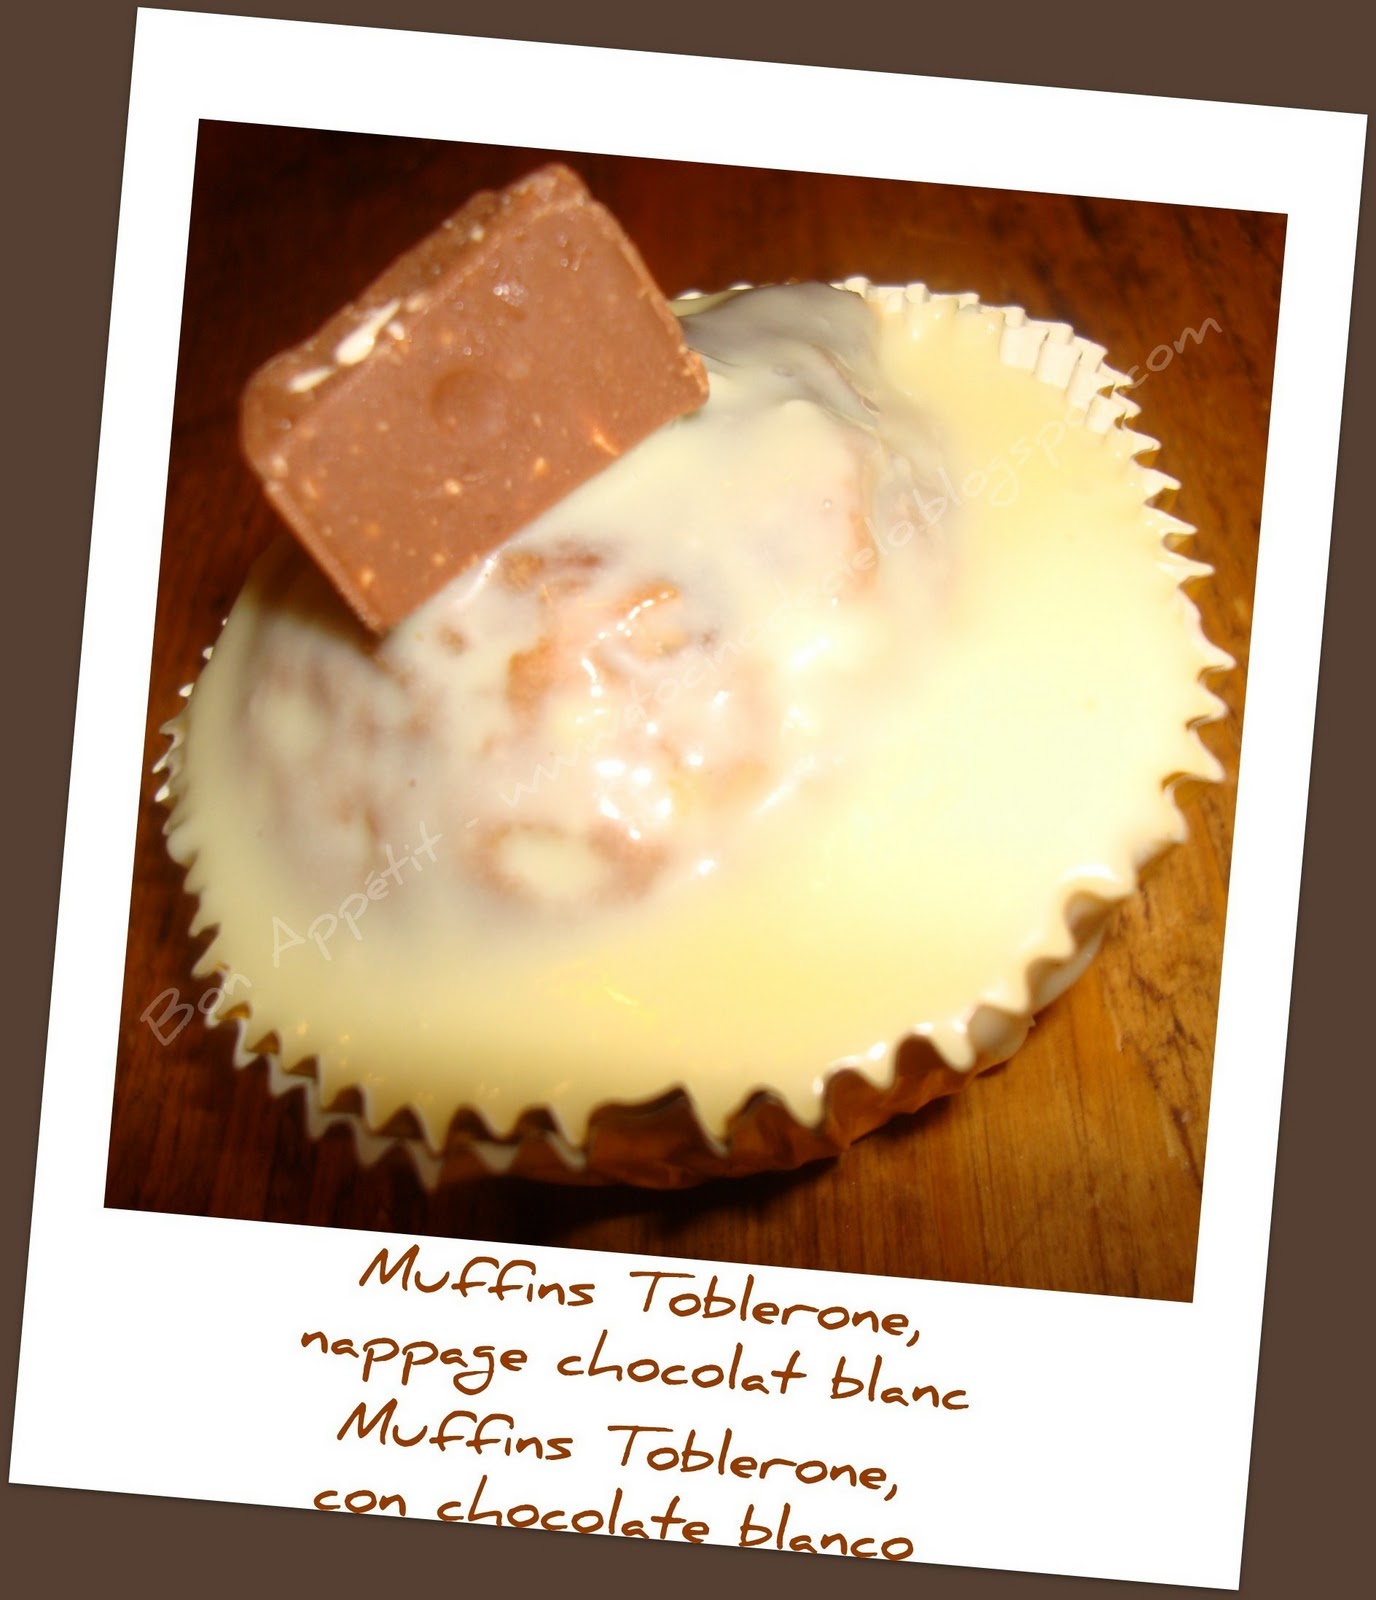 Muffin+Toblerone+nappage+chocolat+blanc.